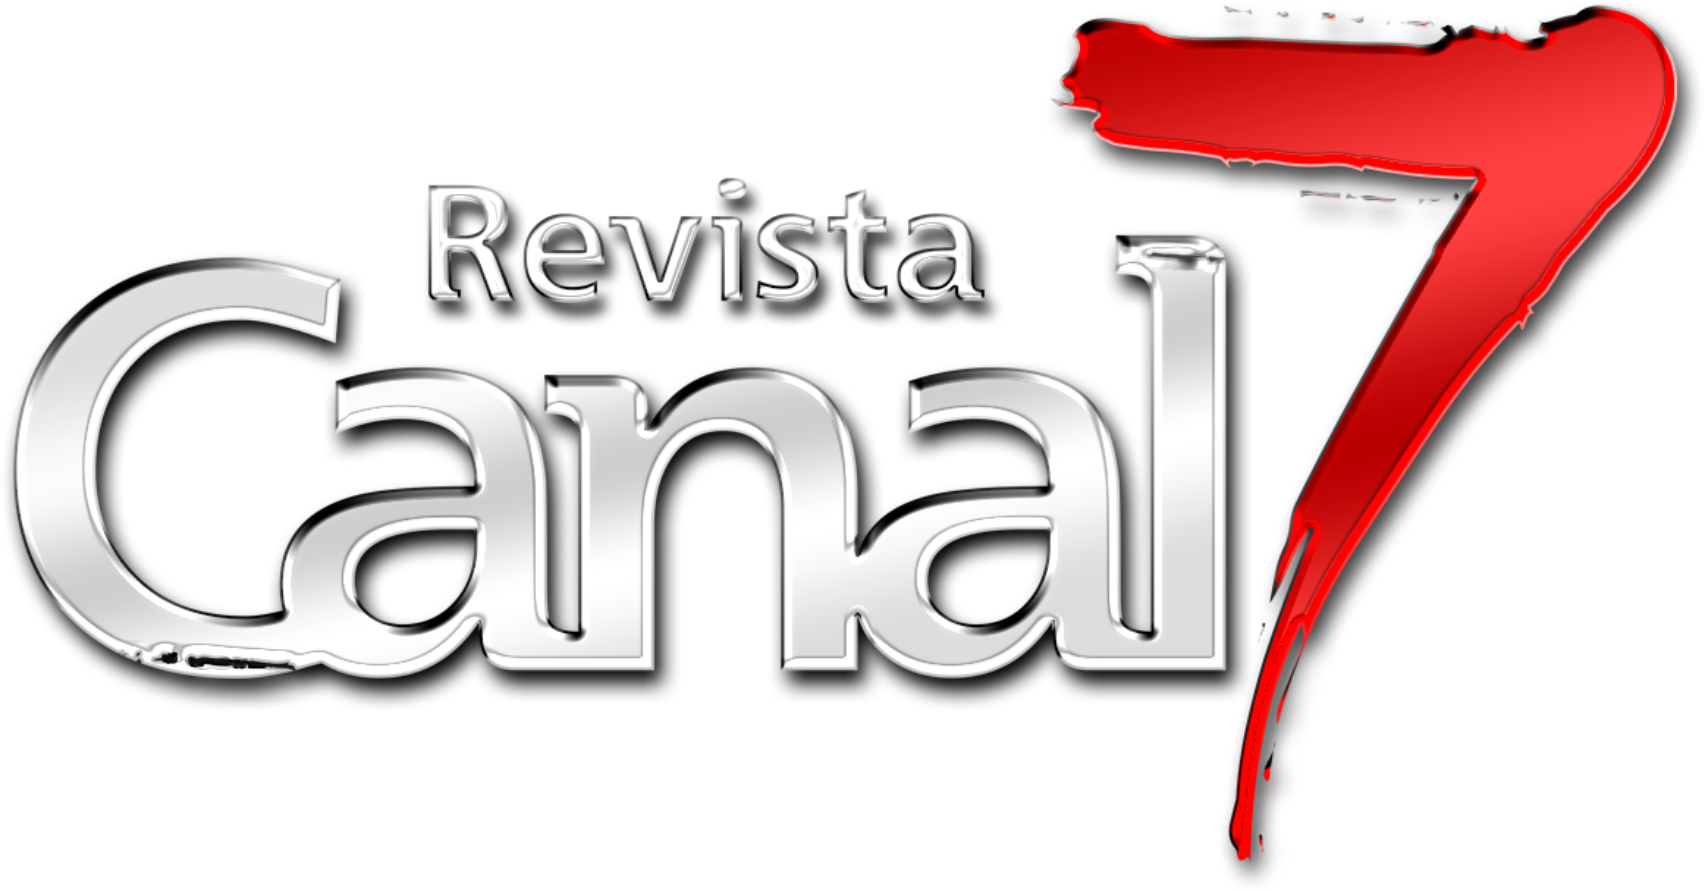 REVISTA CANAL 7